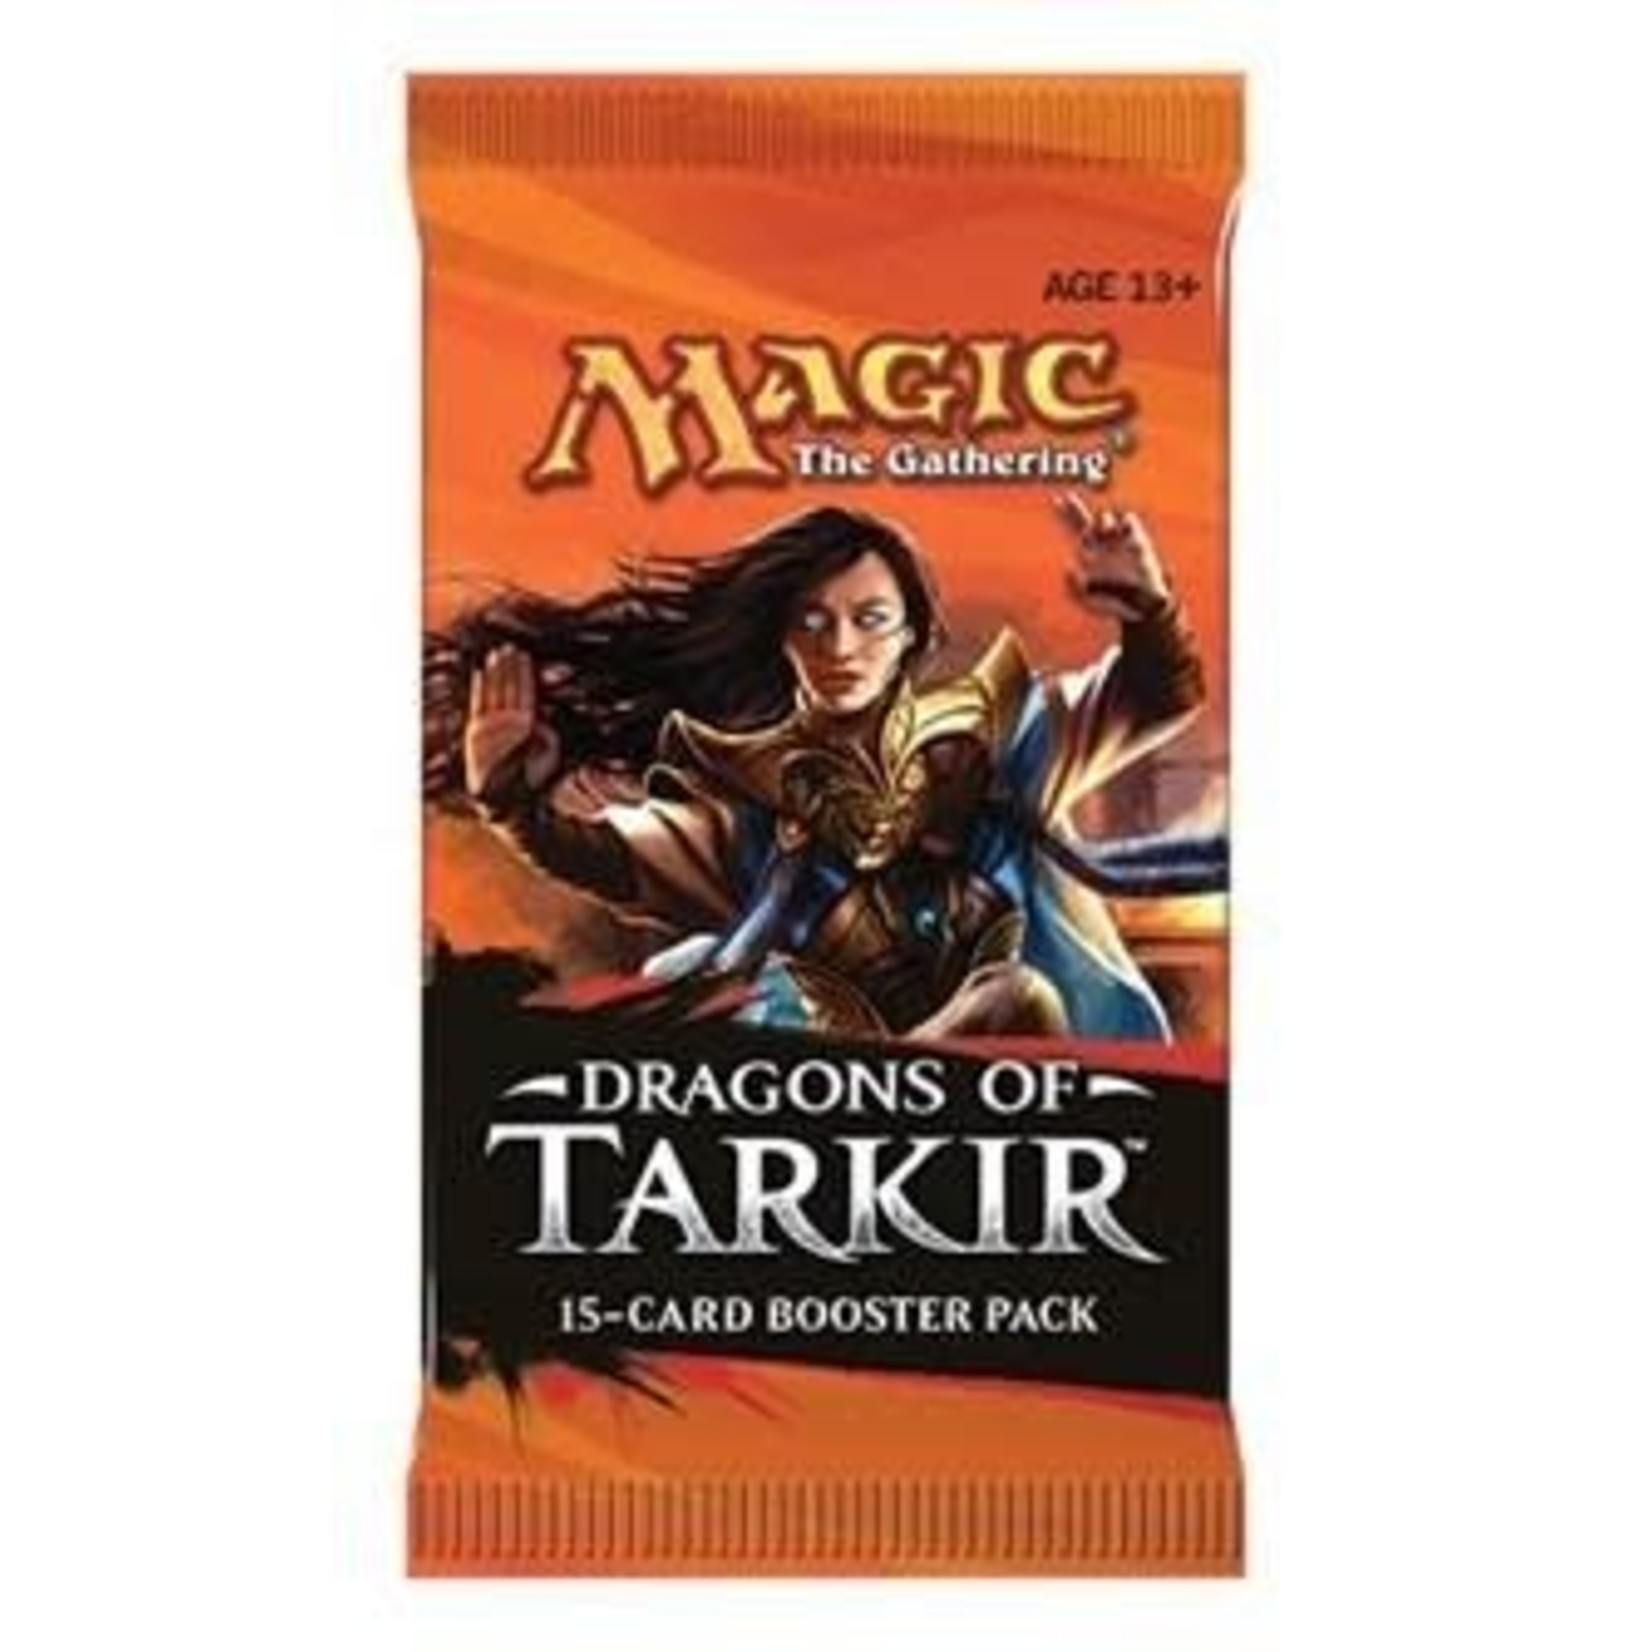 Magic: The Gathering - Dragons of Tarkir Booster Pack